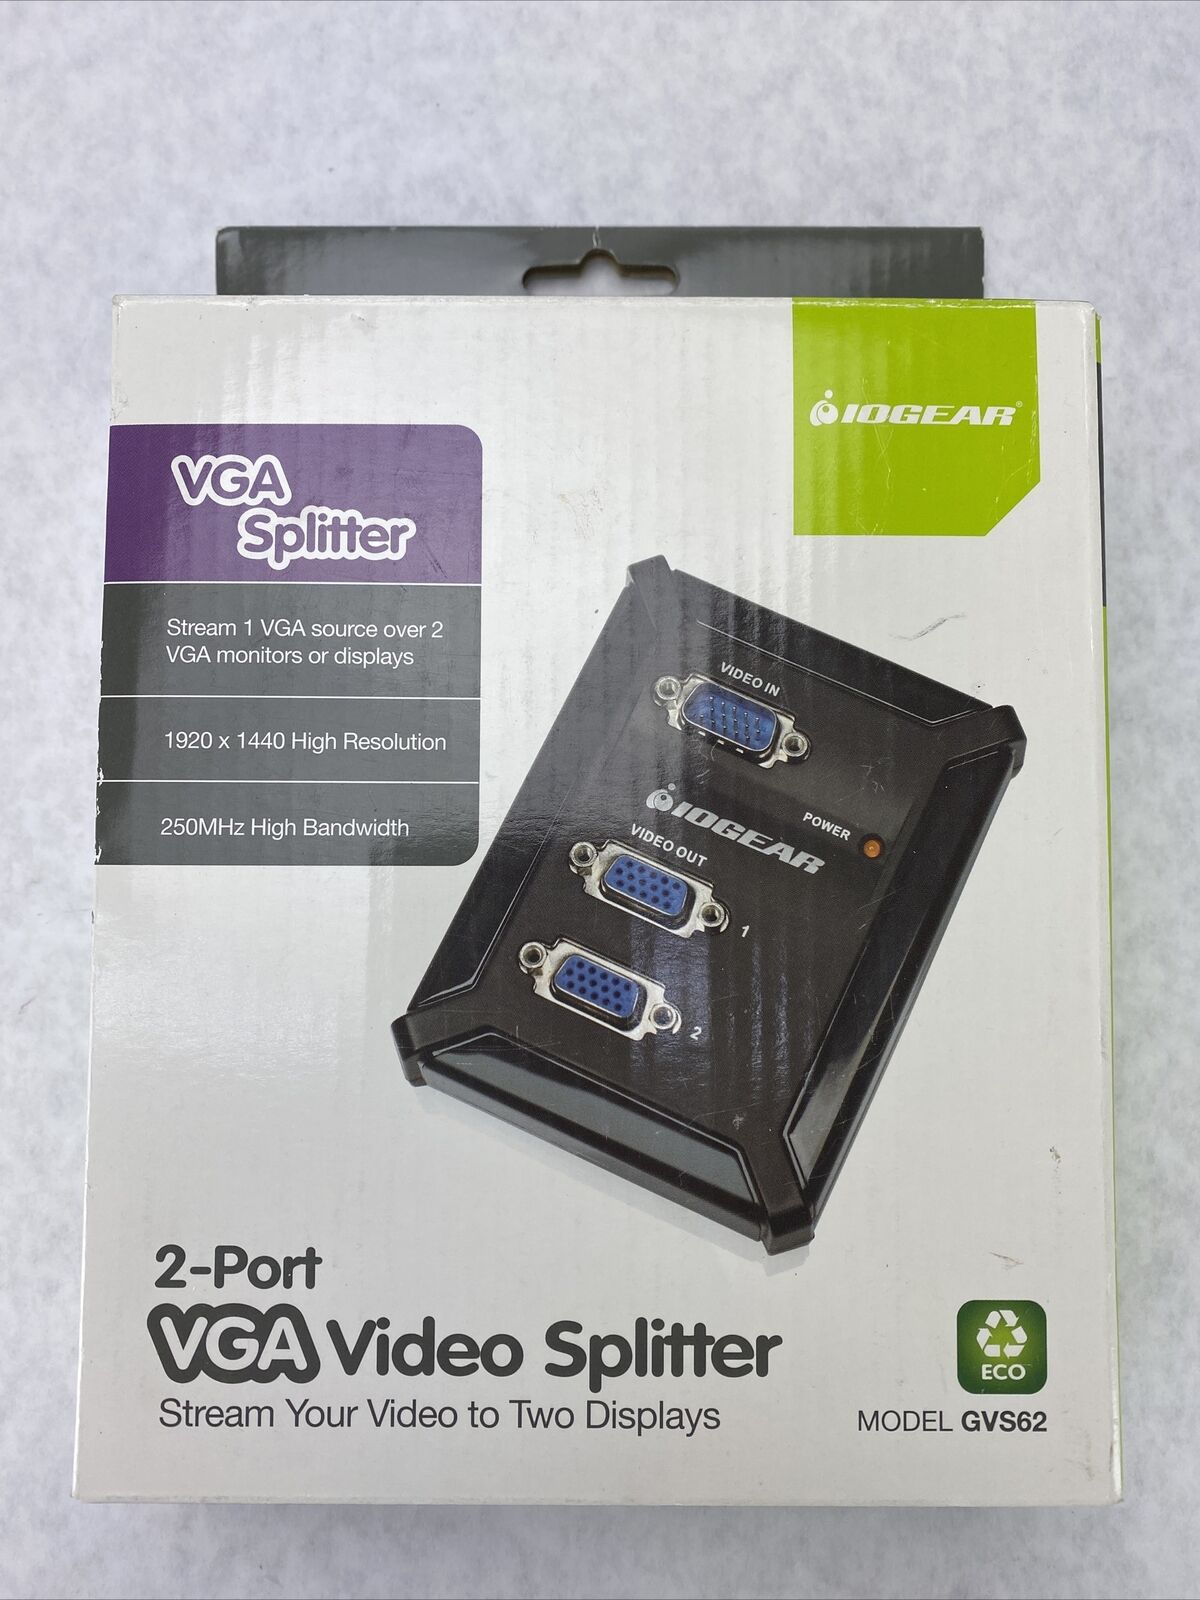 IOGEAR GVS62 2-Port VGA Video Splitter for Analog Displays NEW